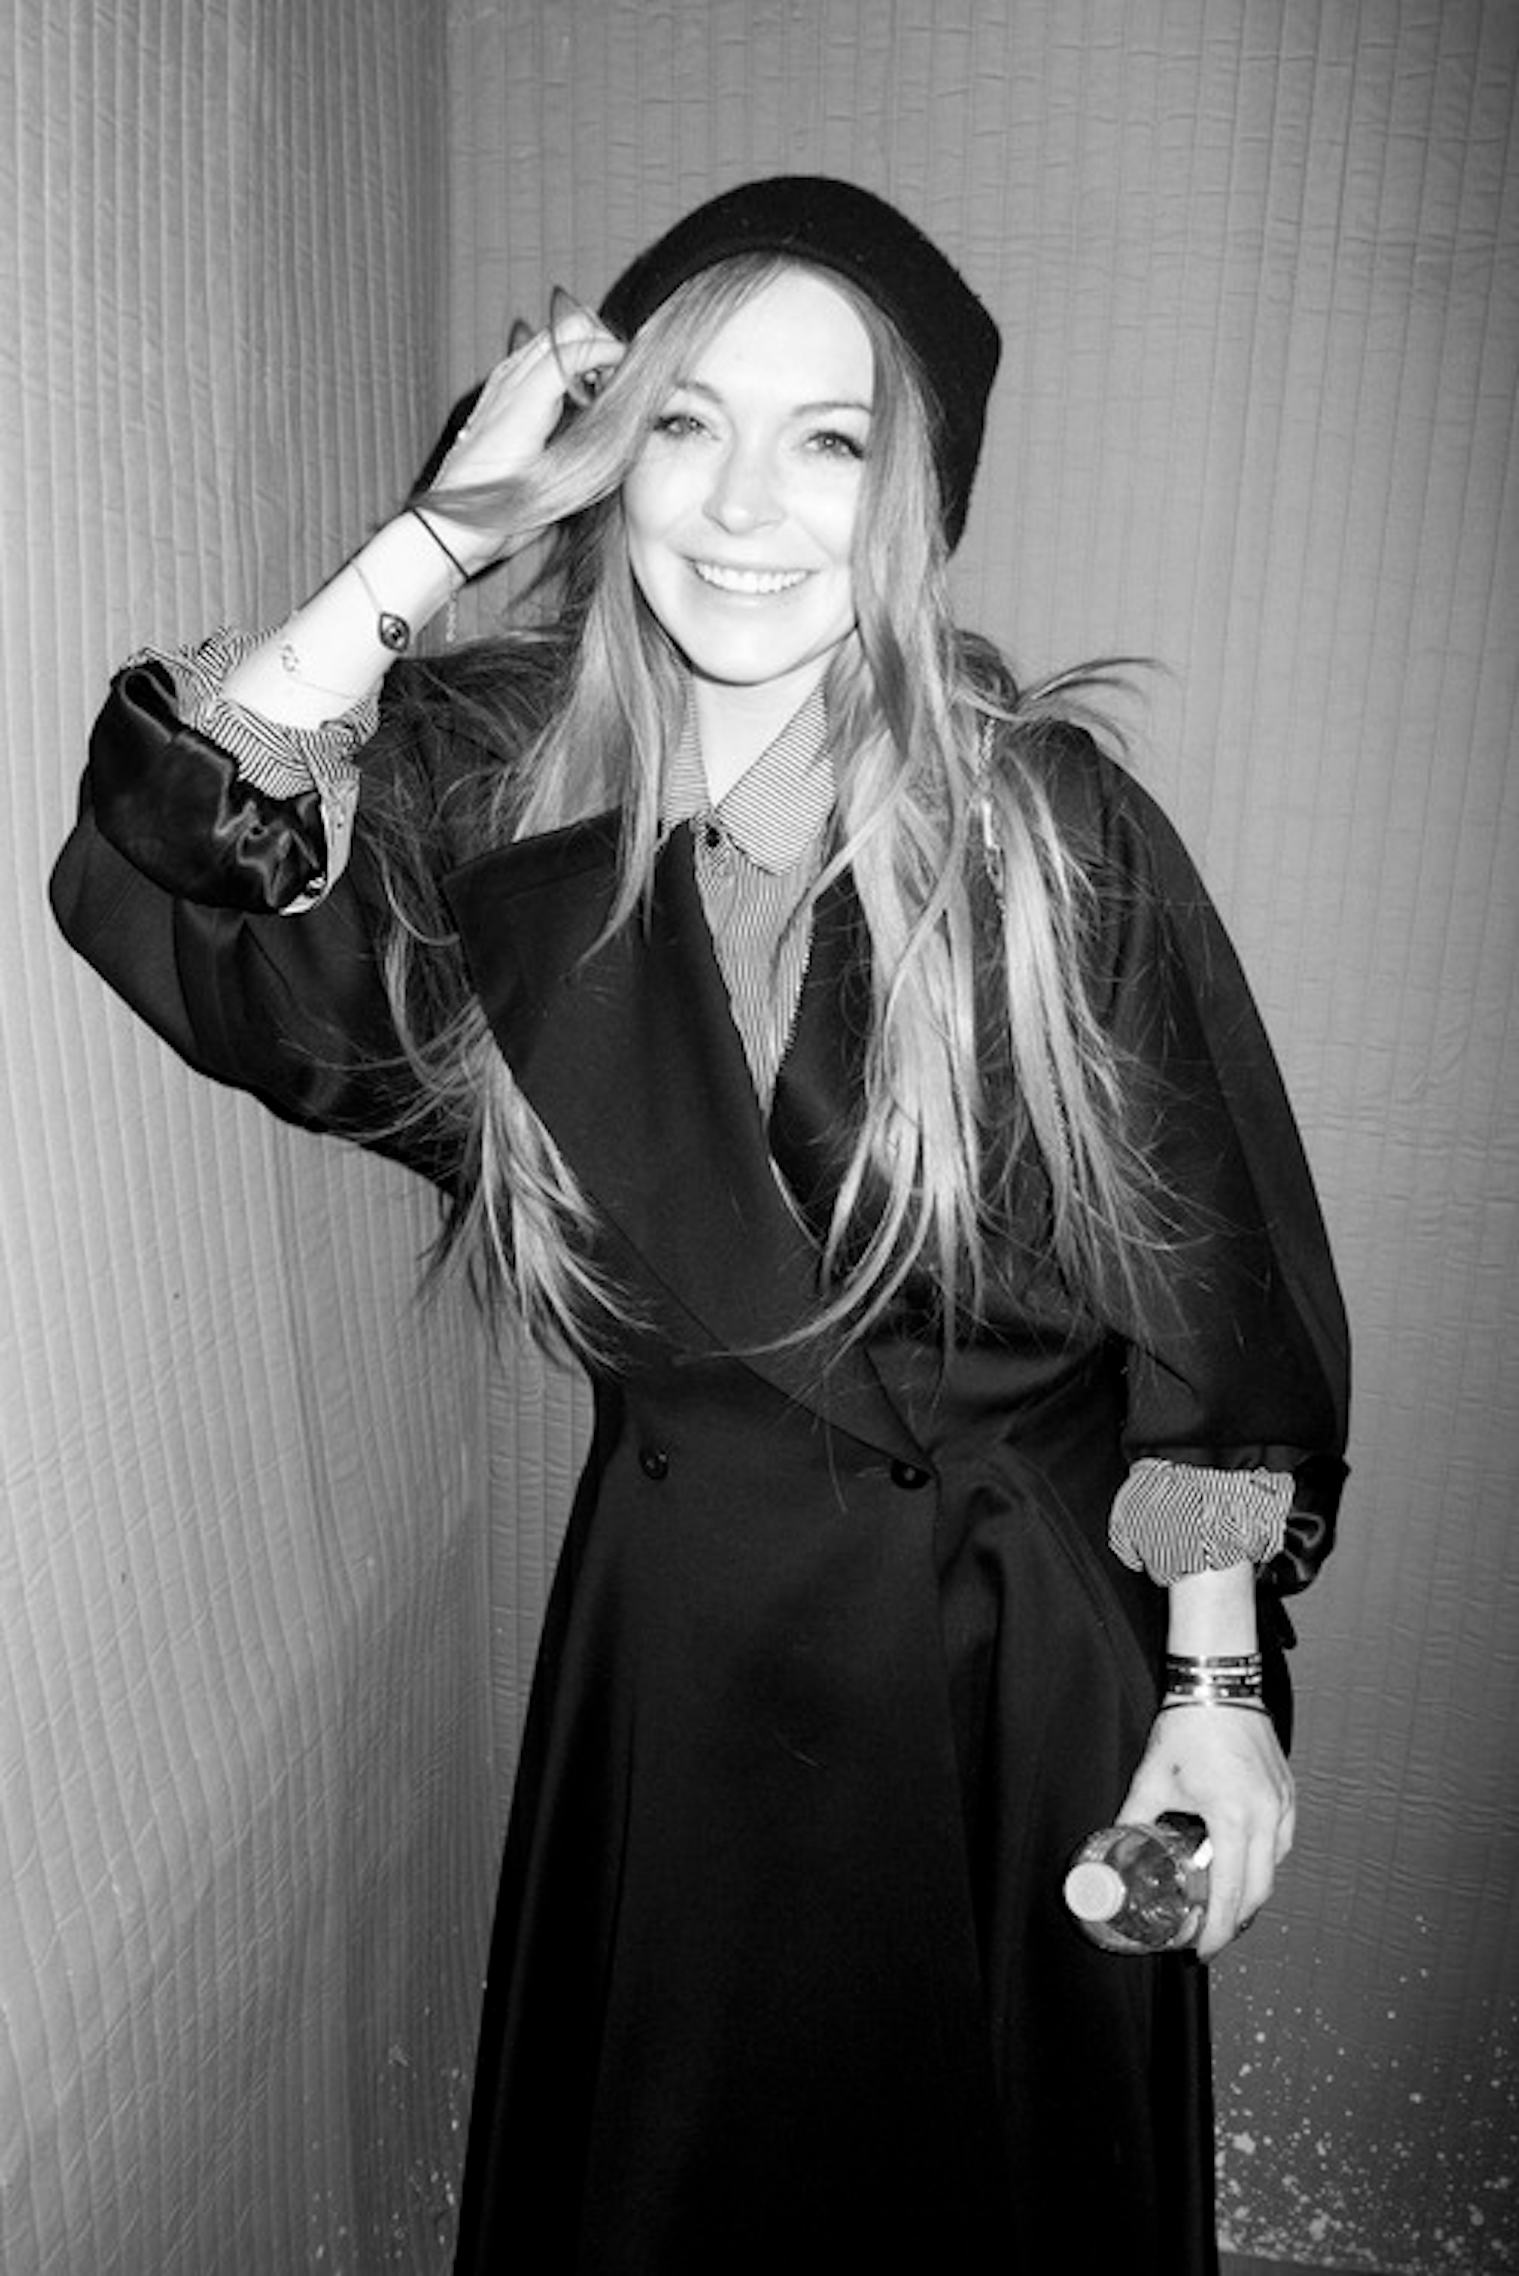 Lindsay Lohans Terry Richardson Photo Shoot Proves She Really Is 